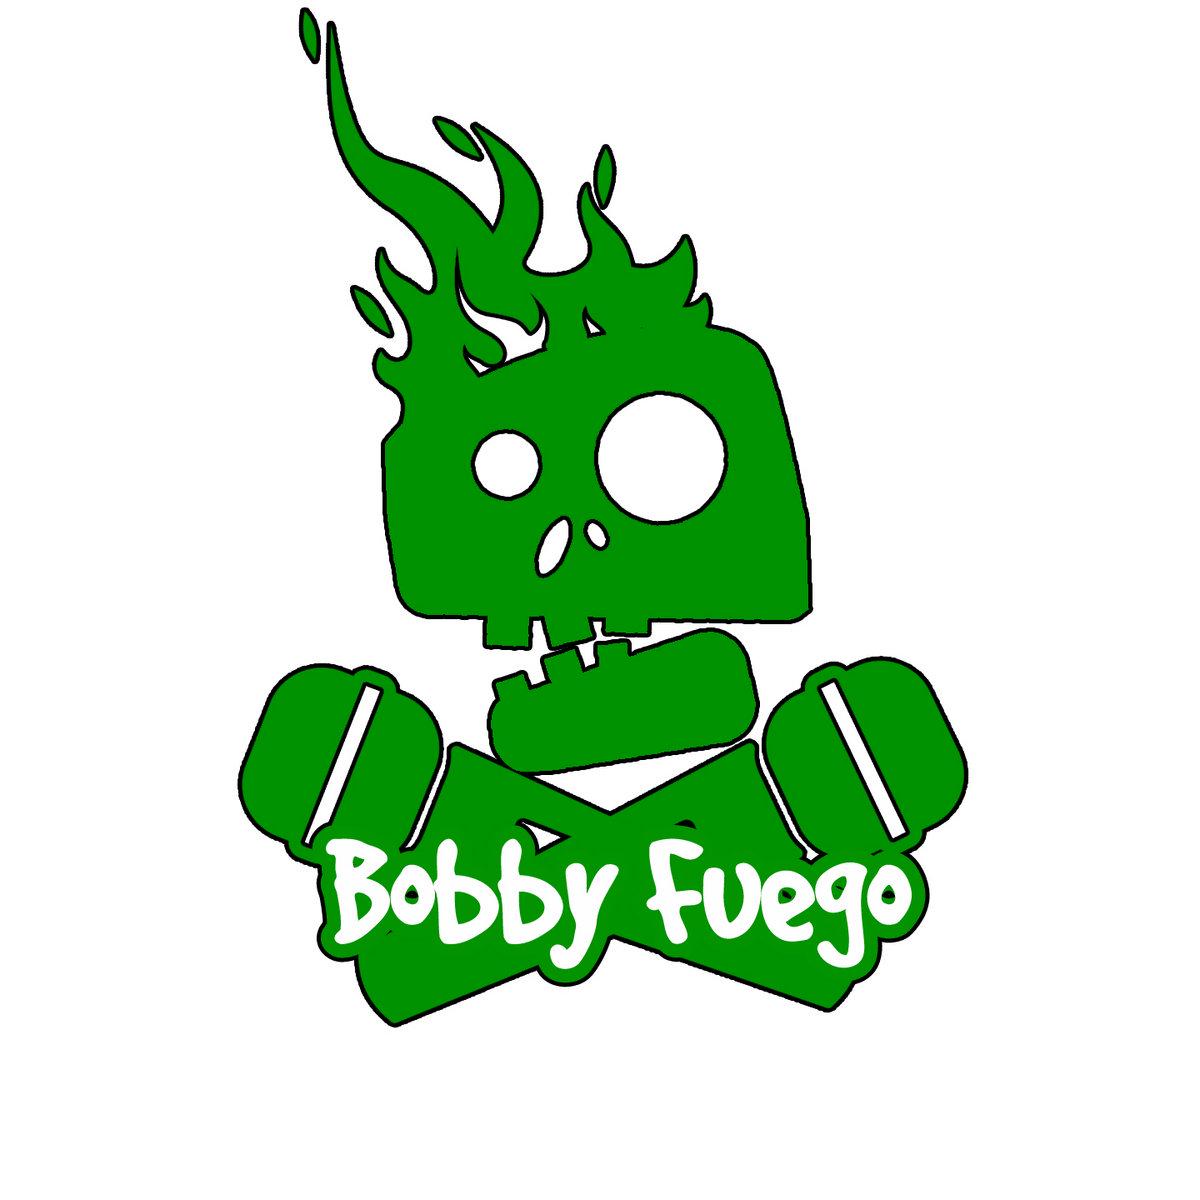 Bobby Fuego